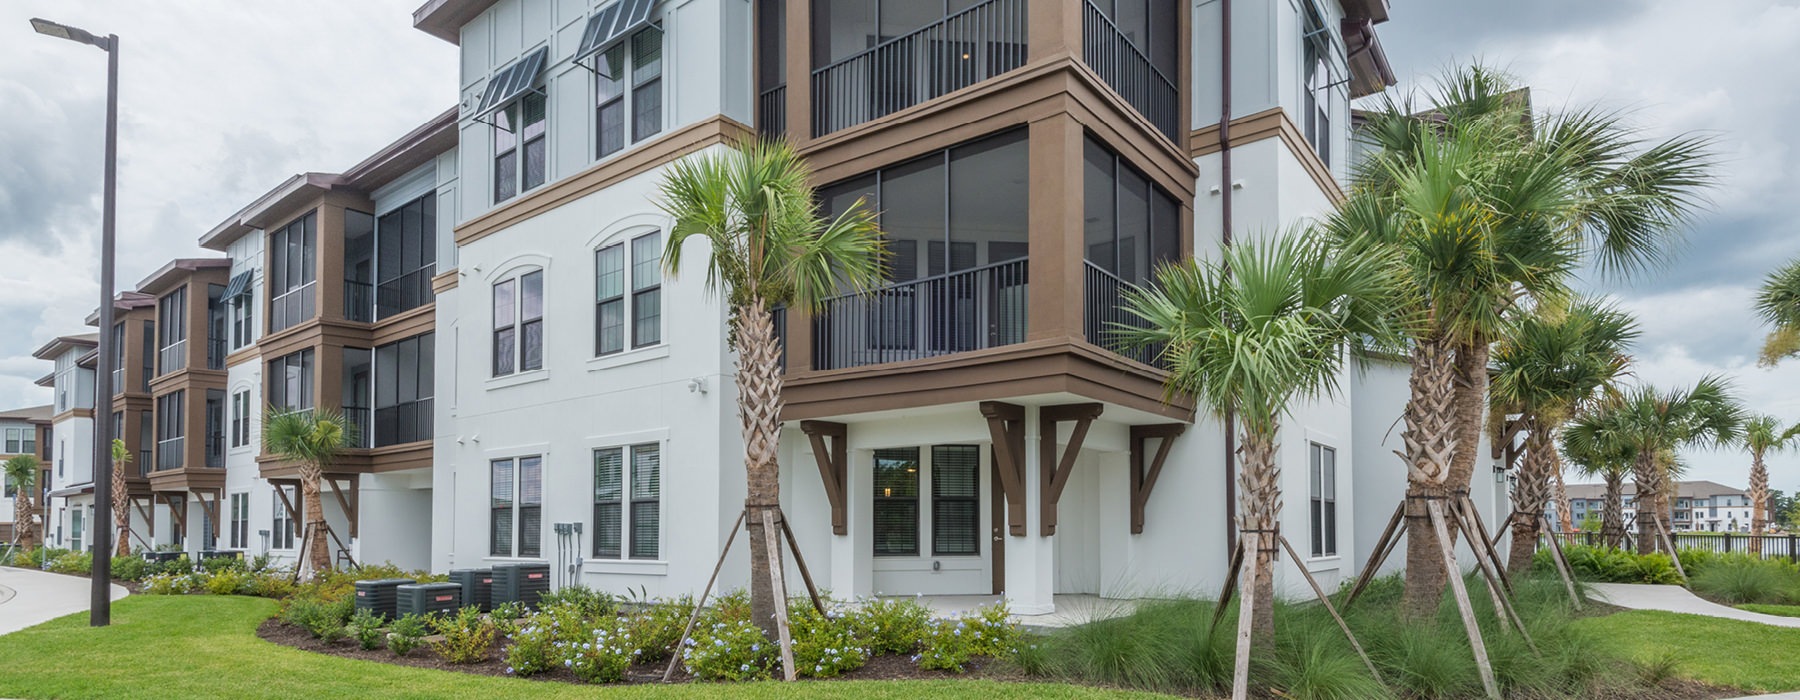 Exterior building view of Ridgelake Apartments located in Sarasota, FL